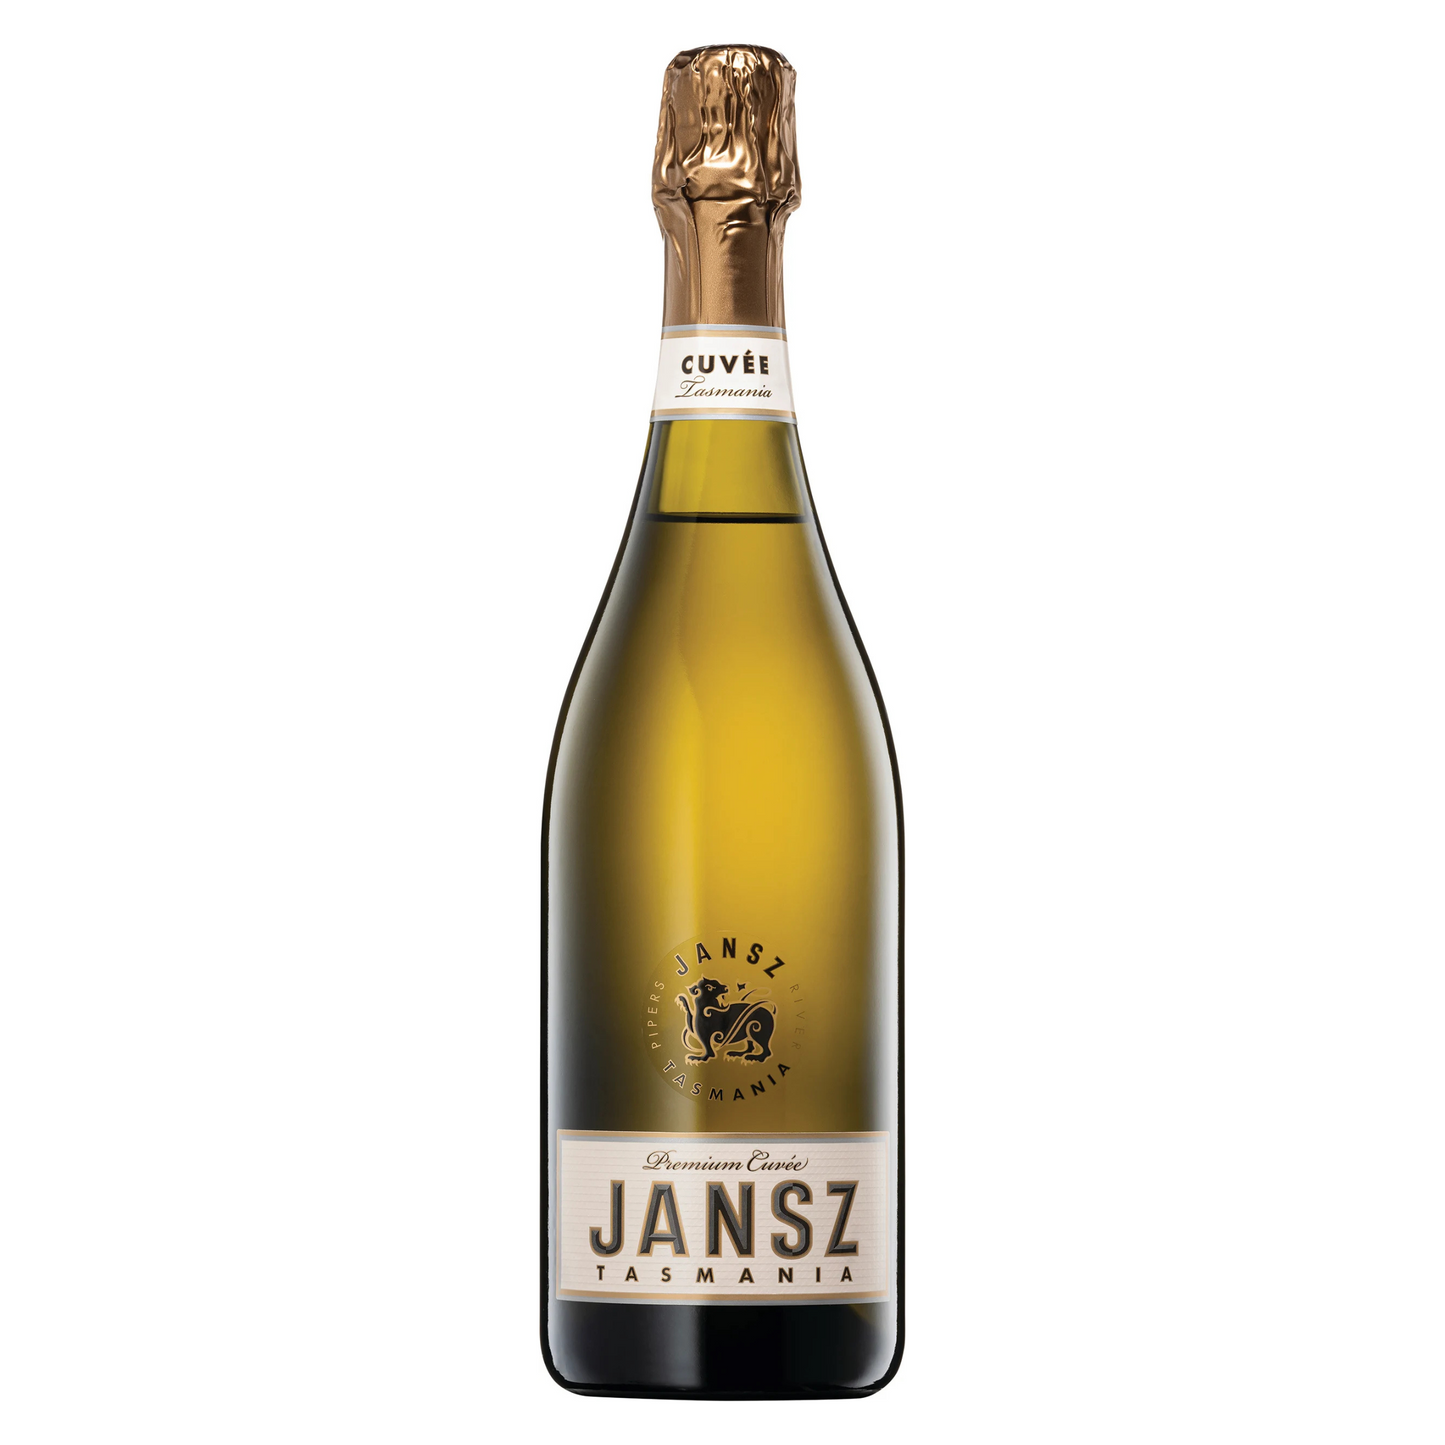 Jansz NV Sparkling wine 750mL